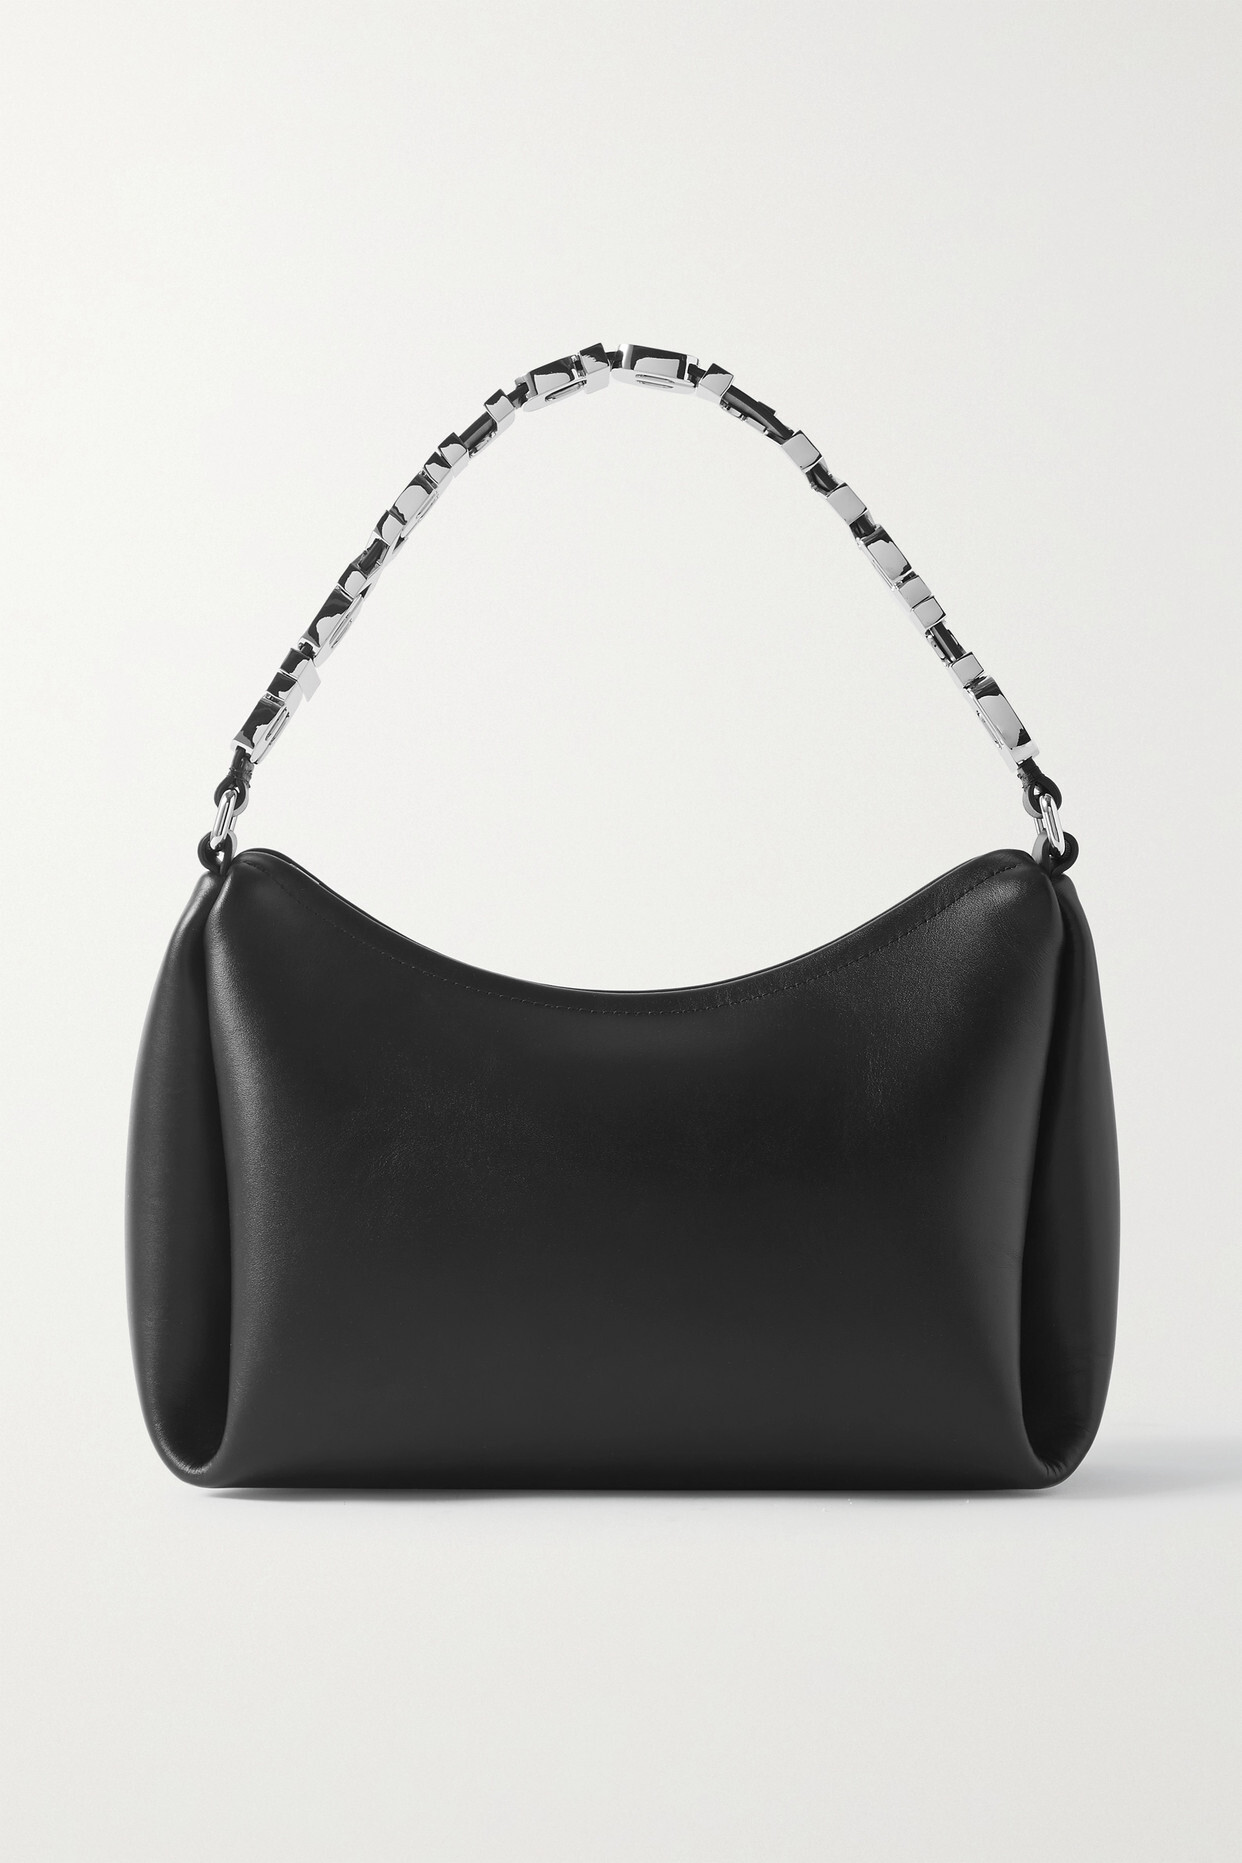 Alexander Wang - Marquess Medium Leather Shoulder Bag - Black